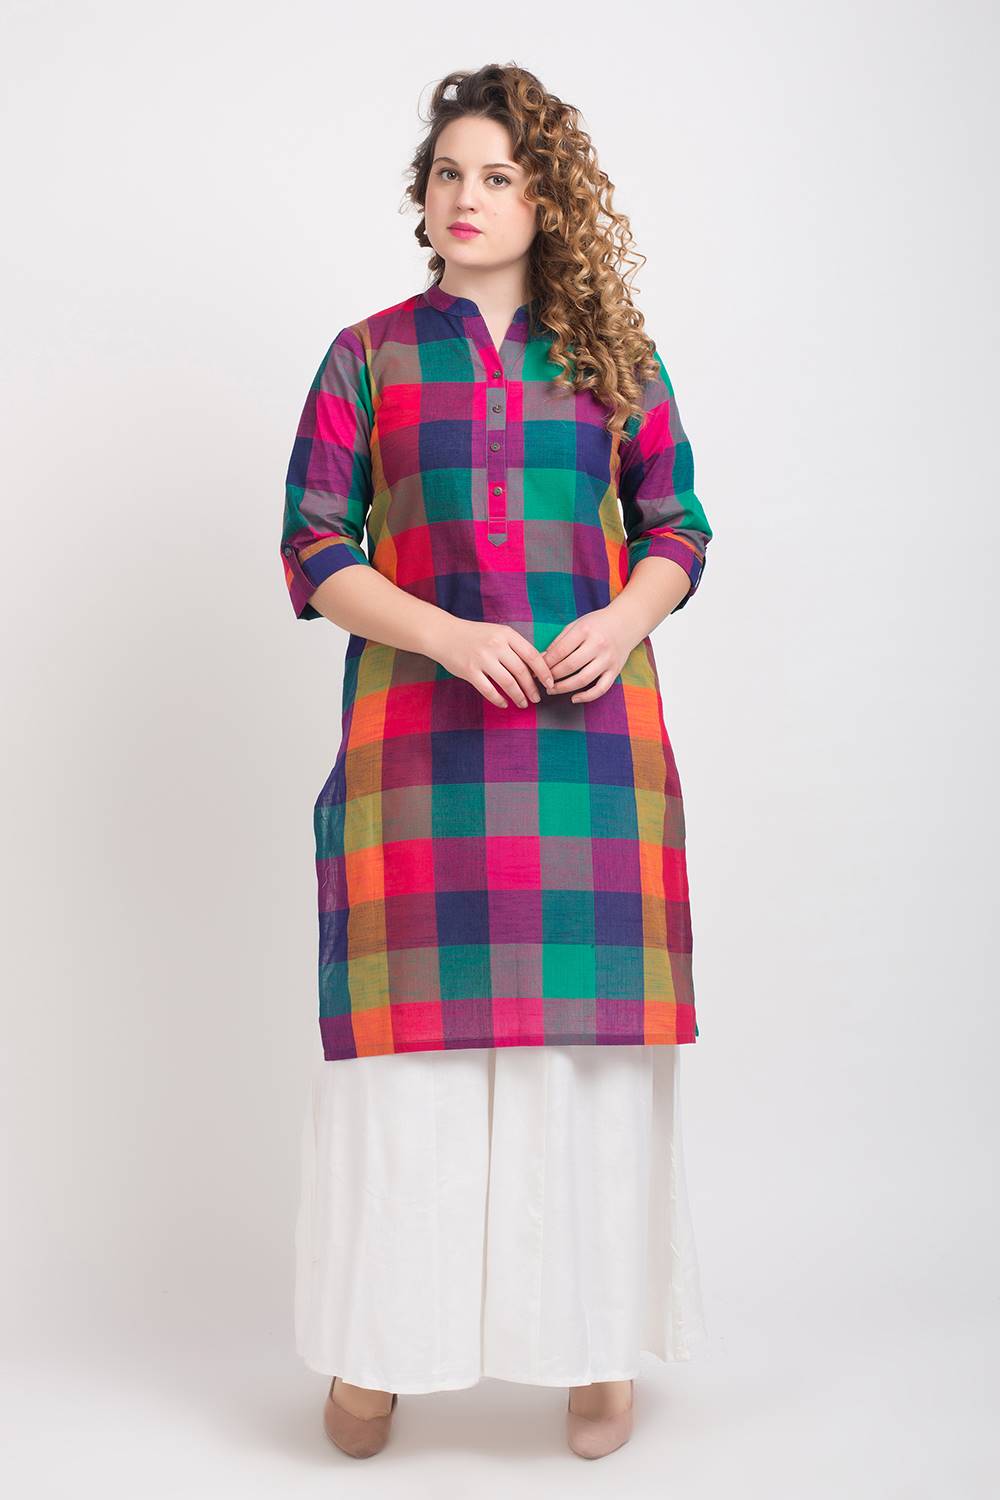 Partywear Designer Multi Color Rayon Weaving Chex Fancy Kurti |  islamiyyat.com